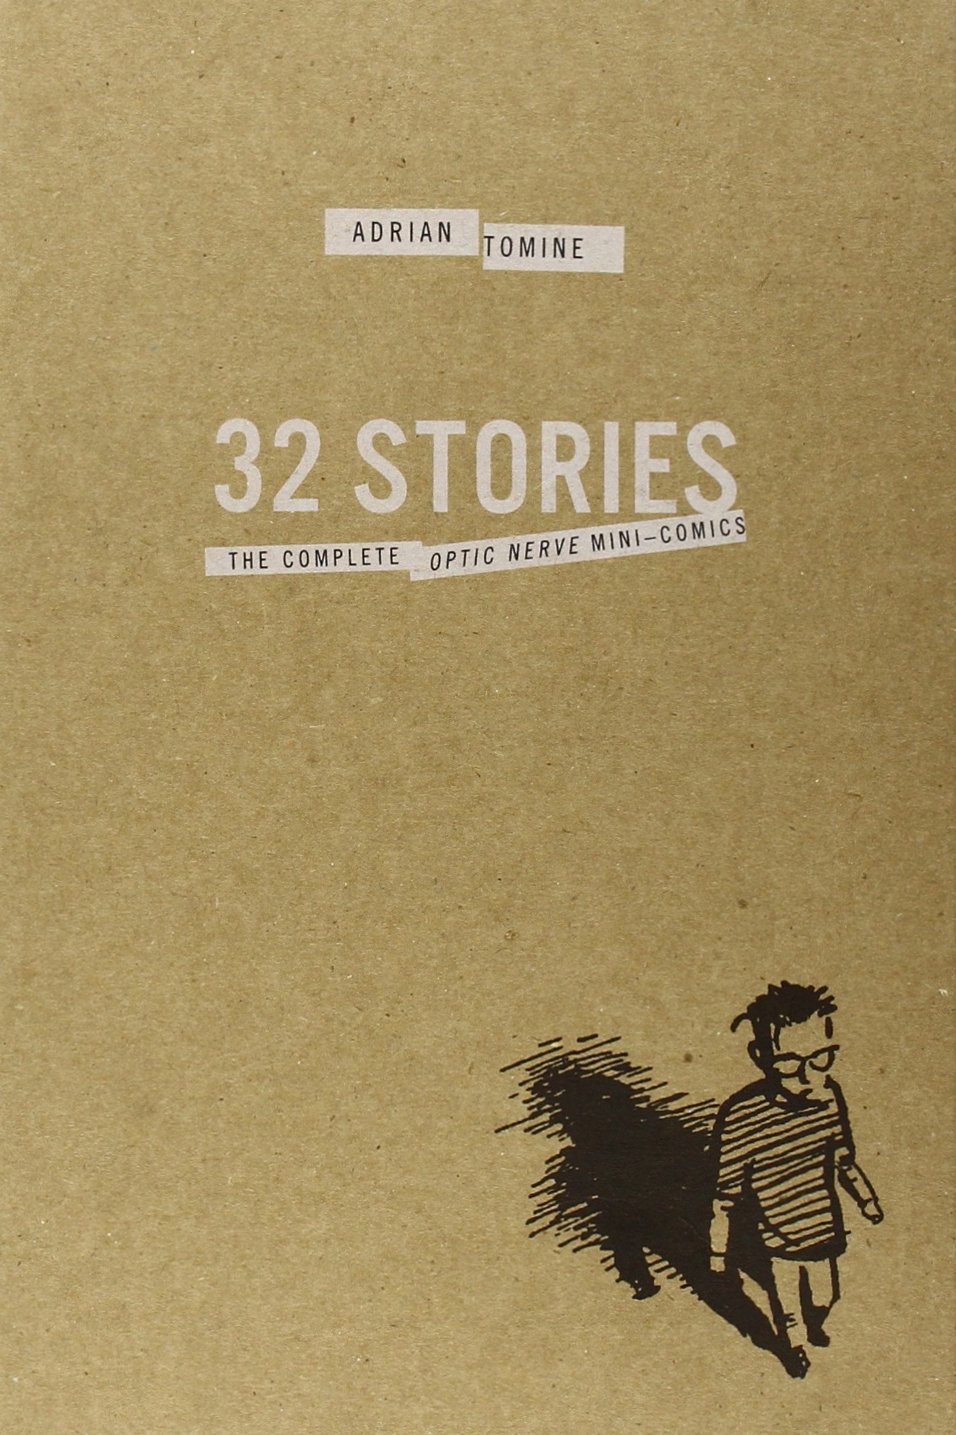 32 Stories: The Complete Optic Nerve Mini-Comics